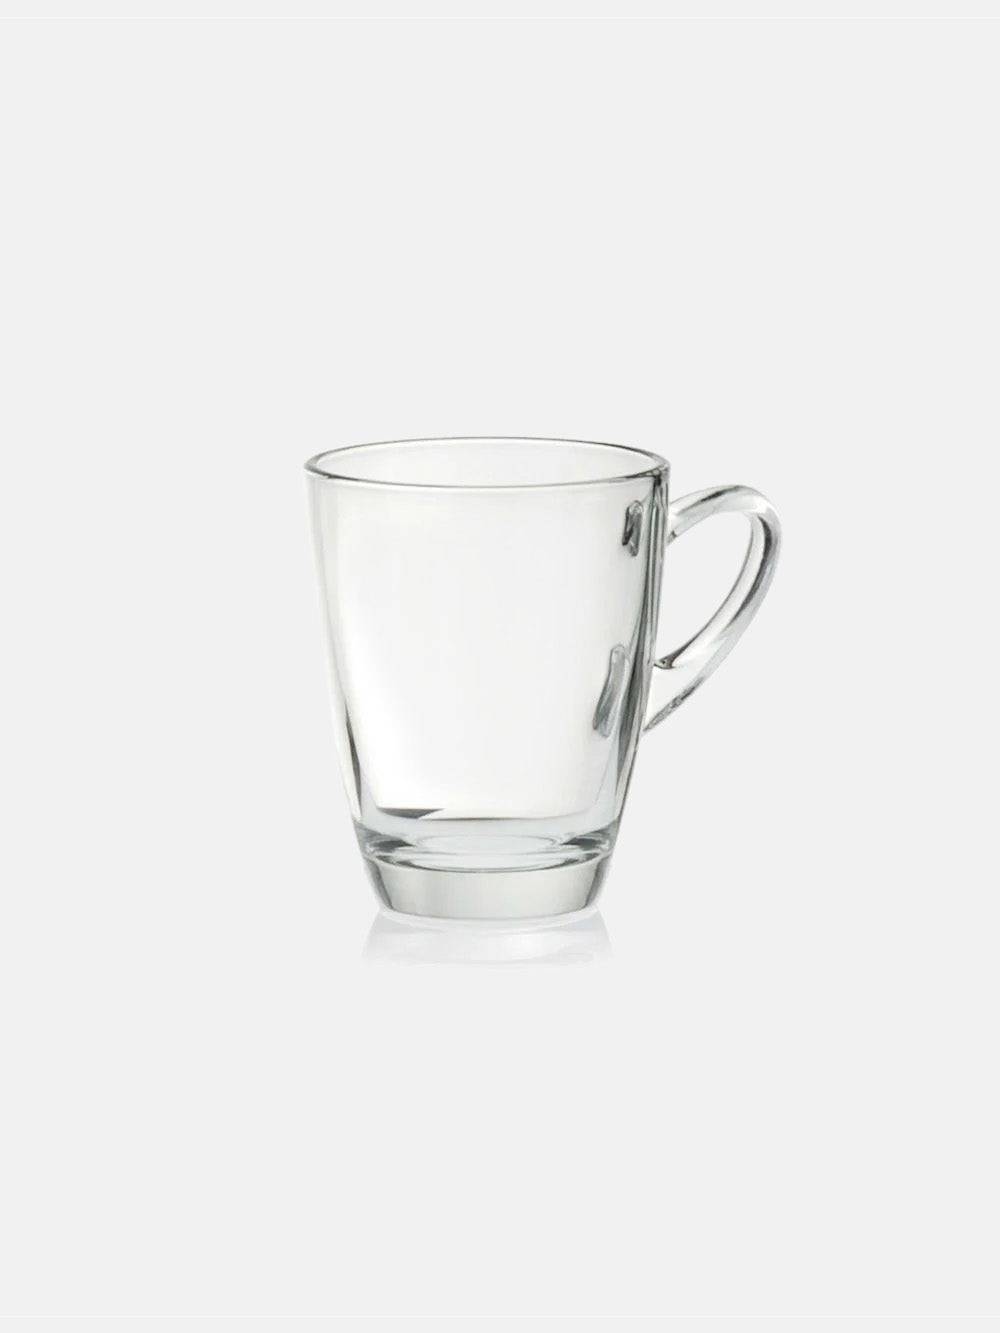 Kenya glass coffee mug